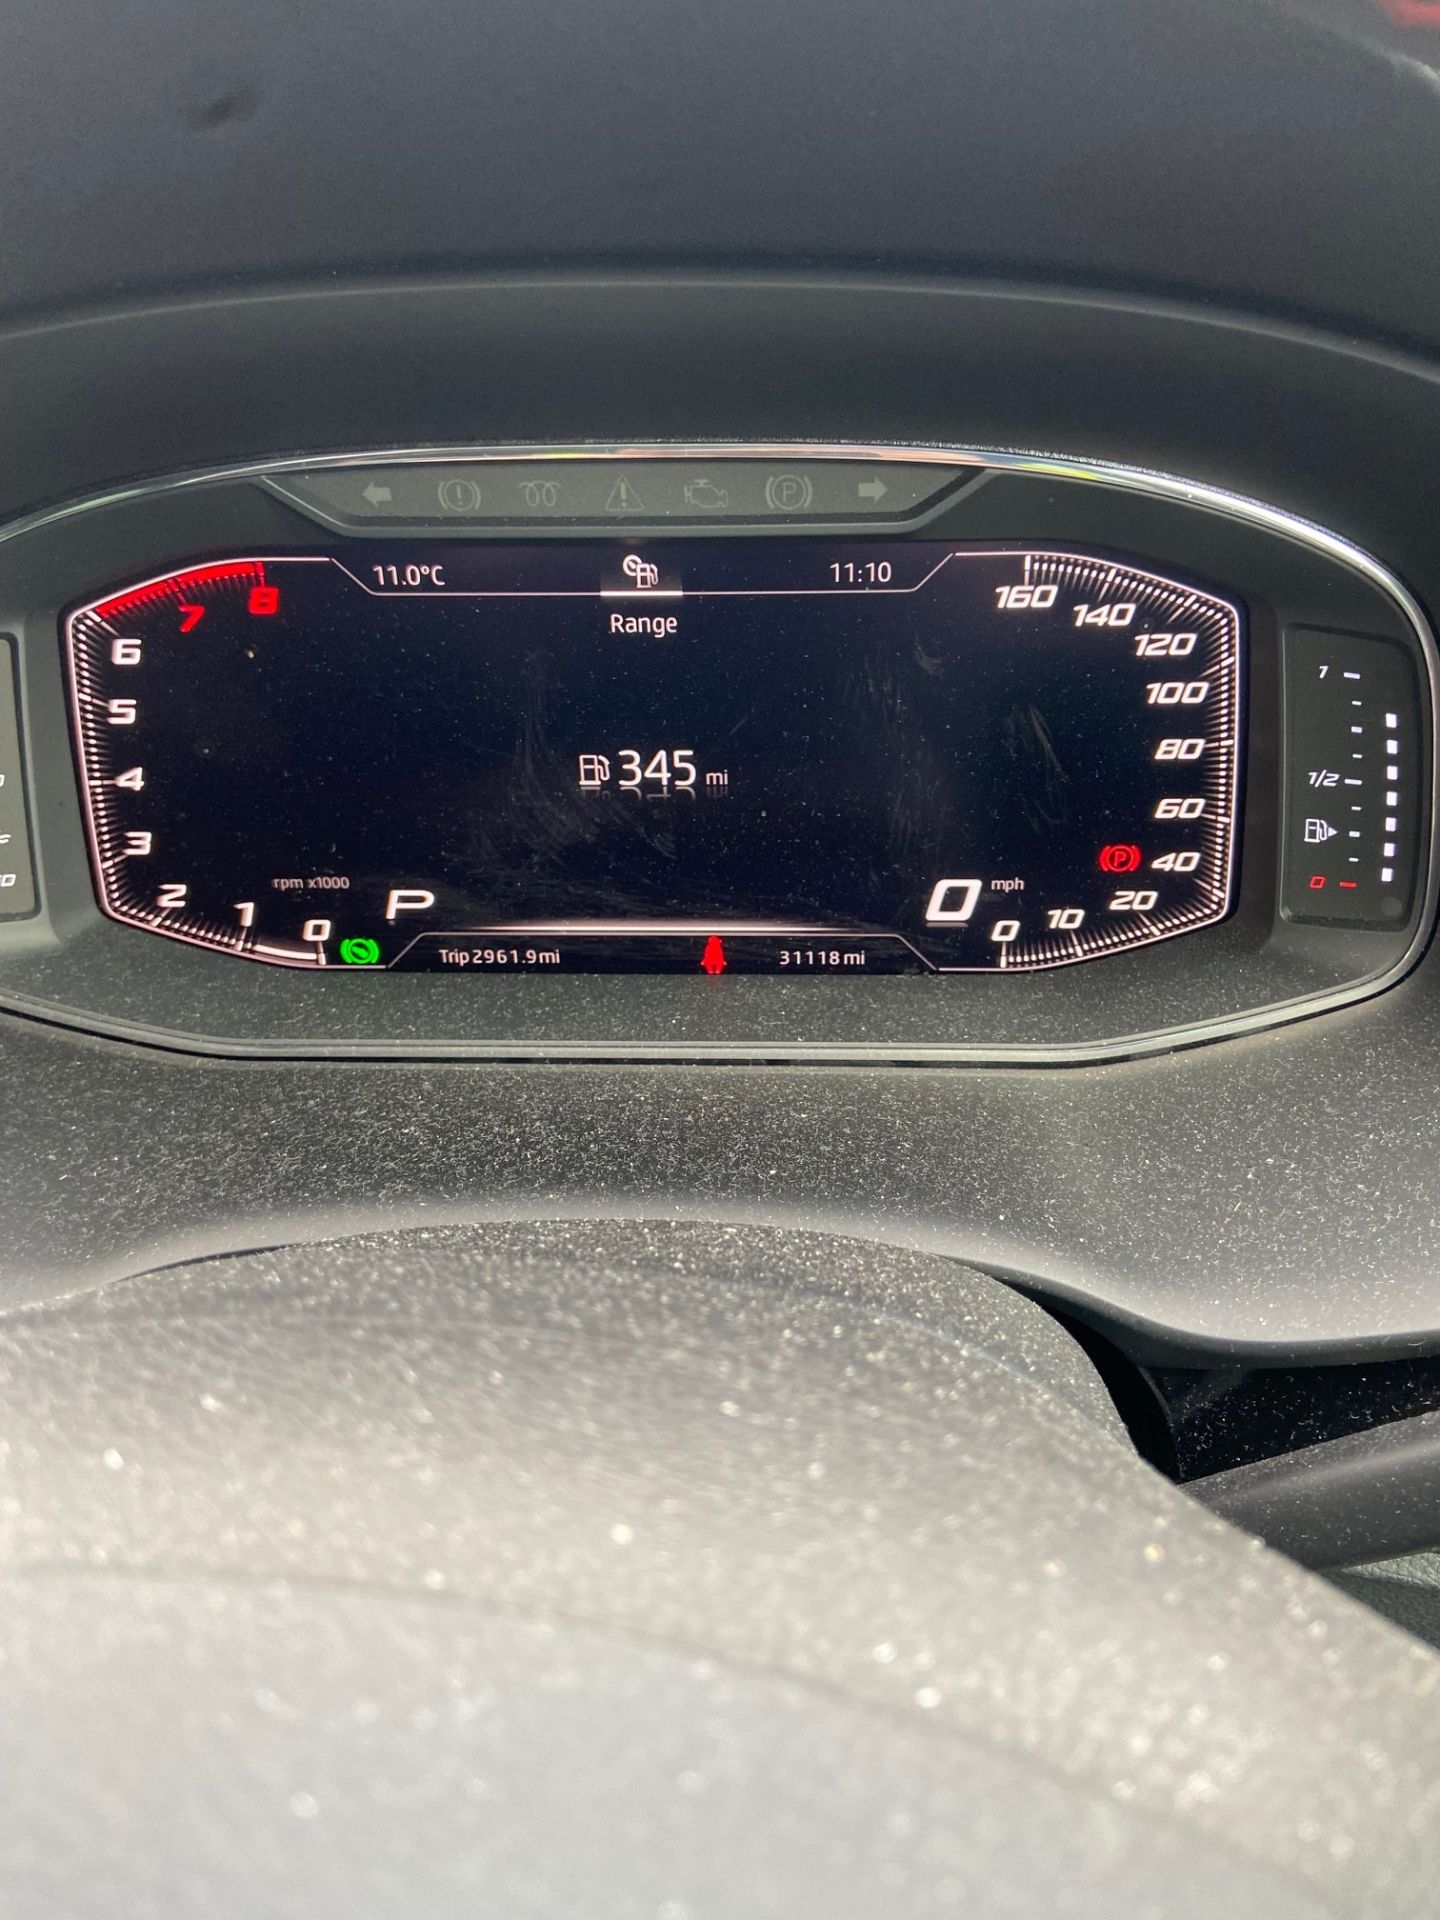 SEAT ATECA (YOM 2019) FR SPORT TSi 4 DRIVE 2.0 five door hatchback - petrol - black. - Image 7 of 13